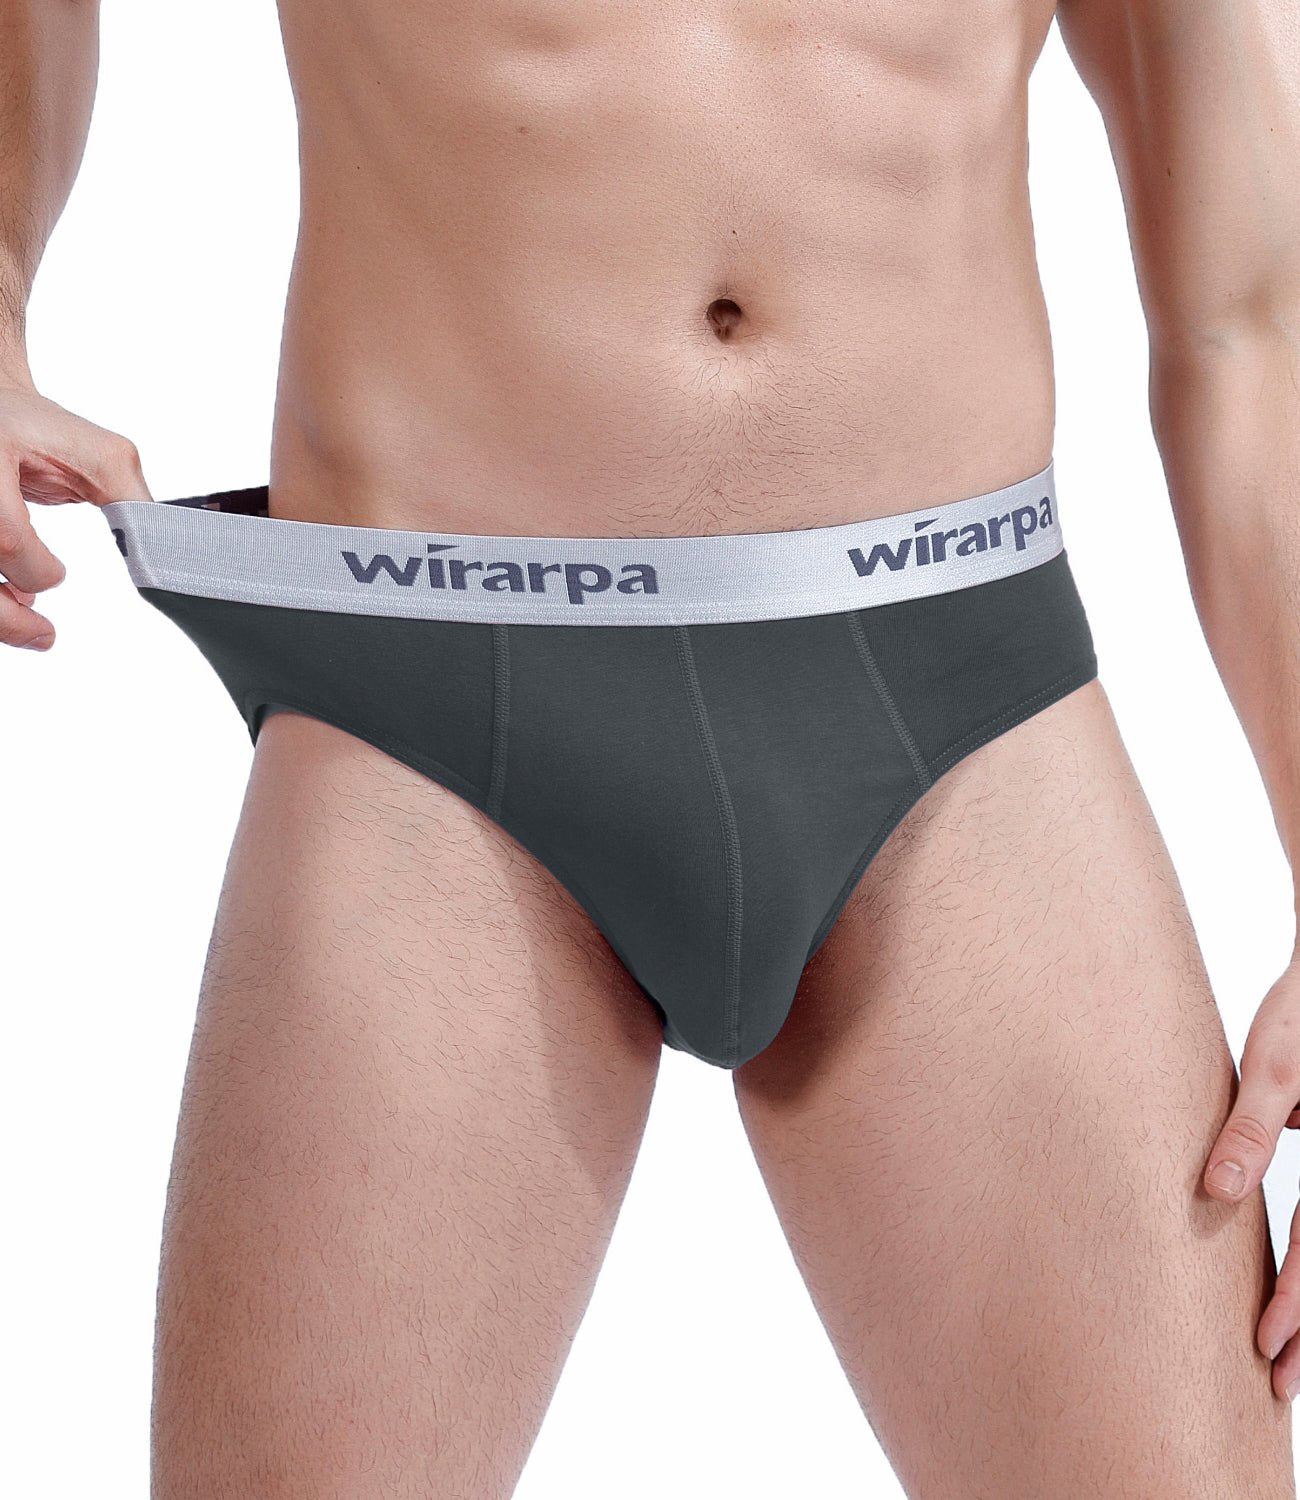 wirarpa Men’s Supportive Wide Waistband Cotton Briefs 4 Pack - Wirarpa Apparel, Inc.